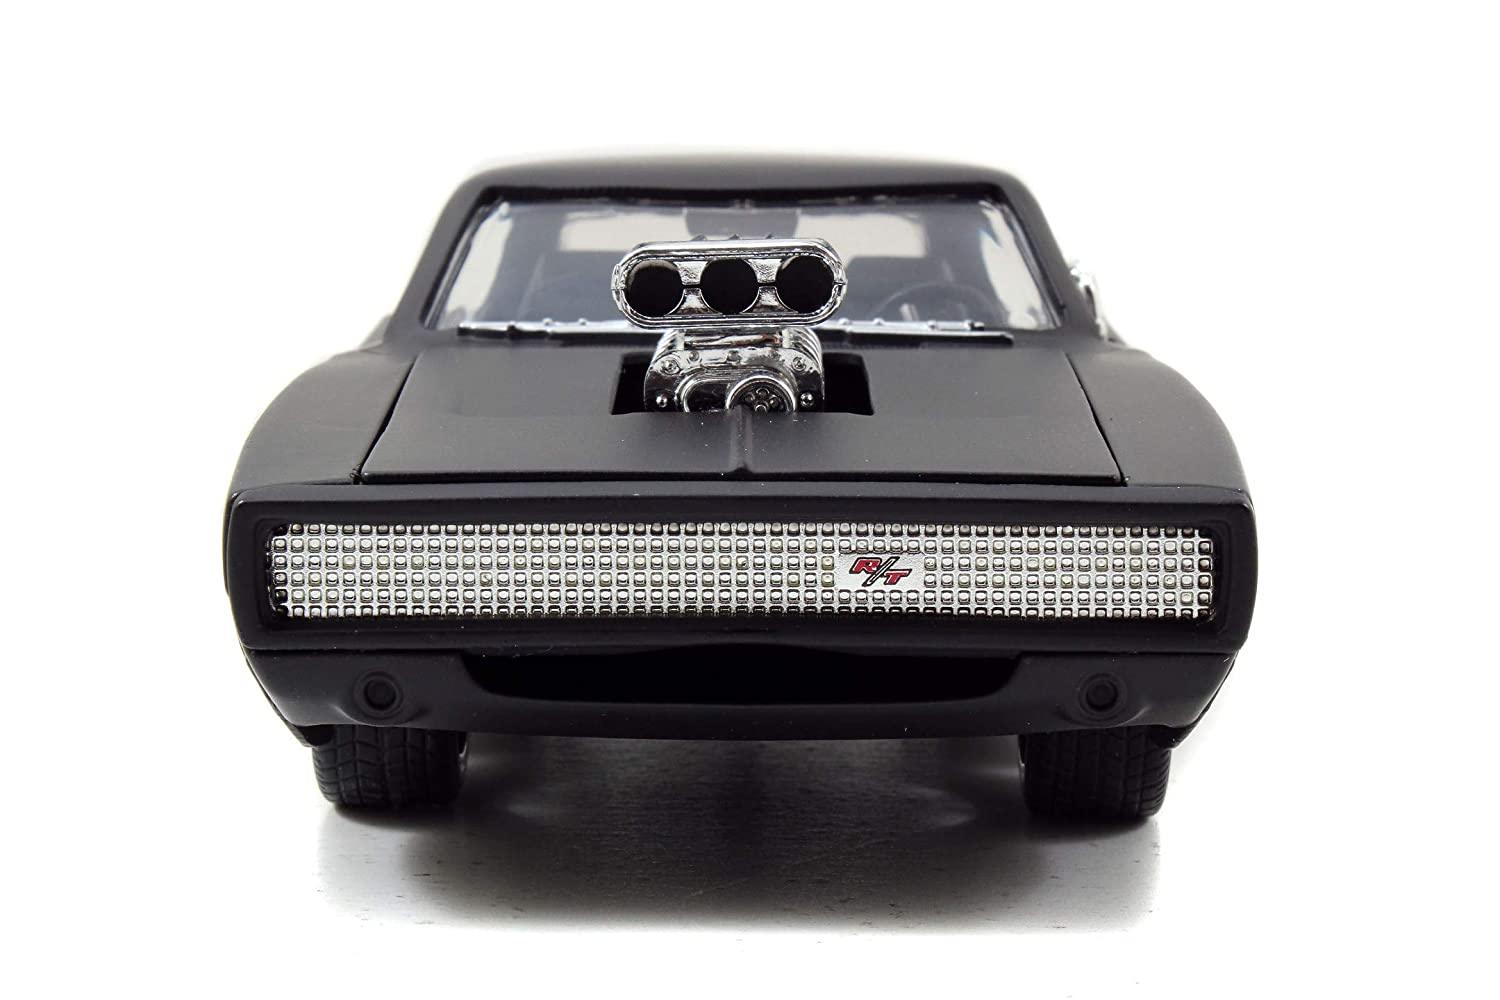 Jada Fast & Furious 1:24 Matte Black 1970 Dodge Charger (Street) Diecast Car